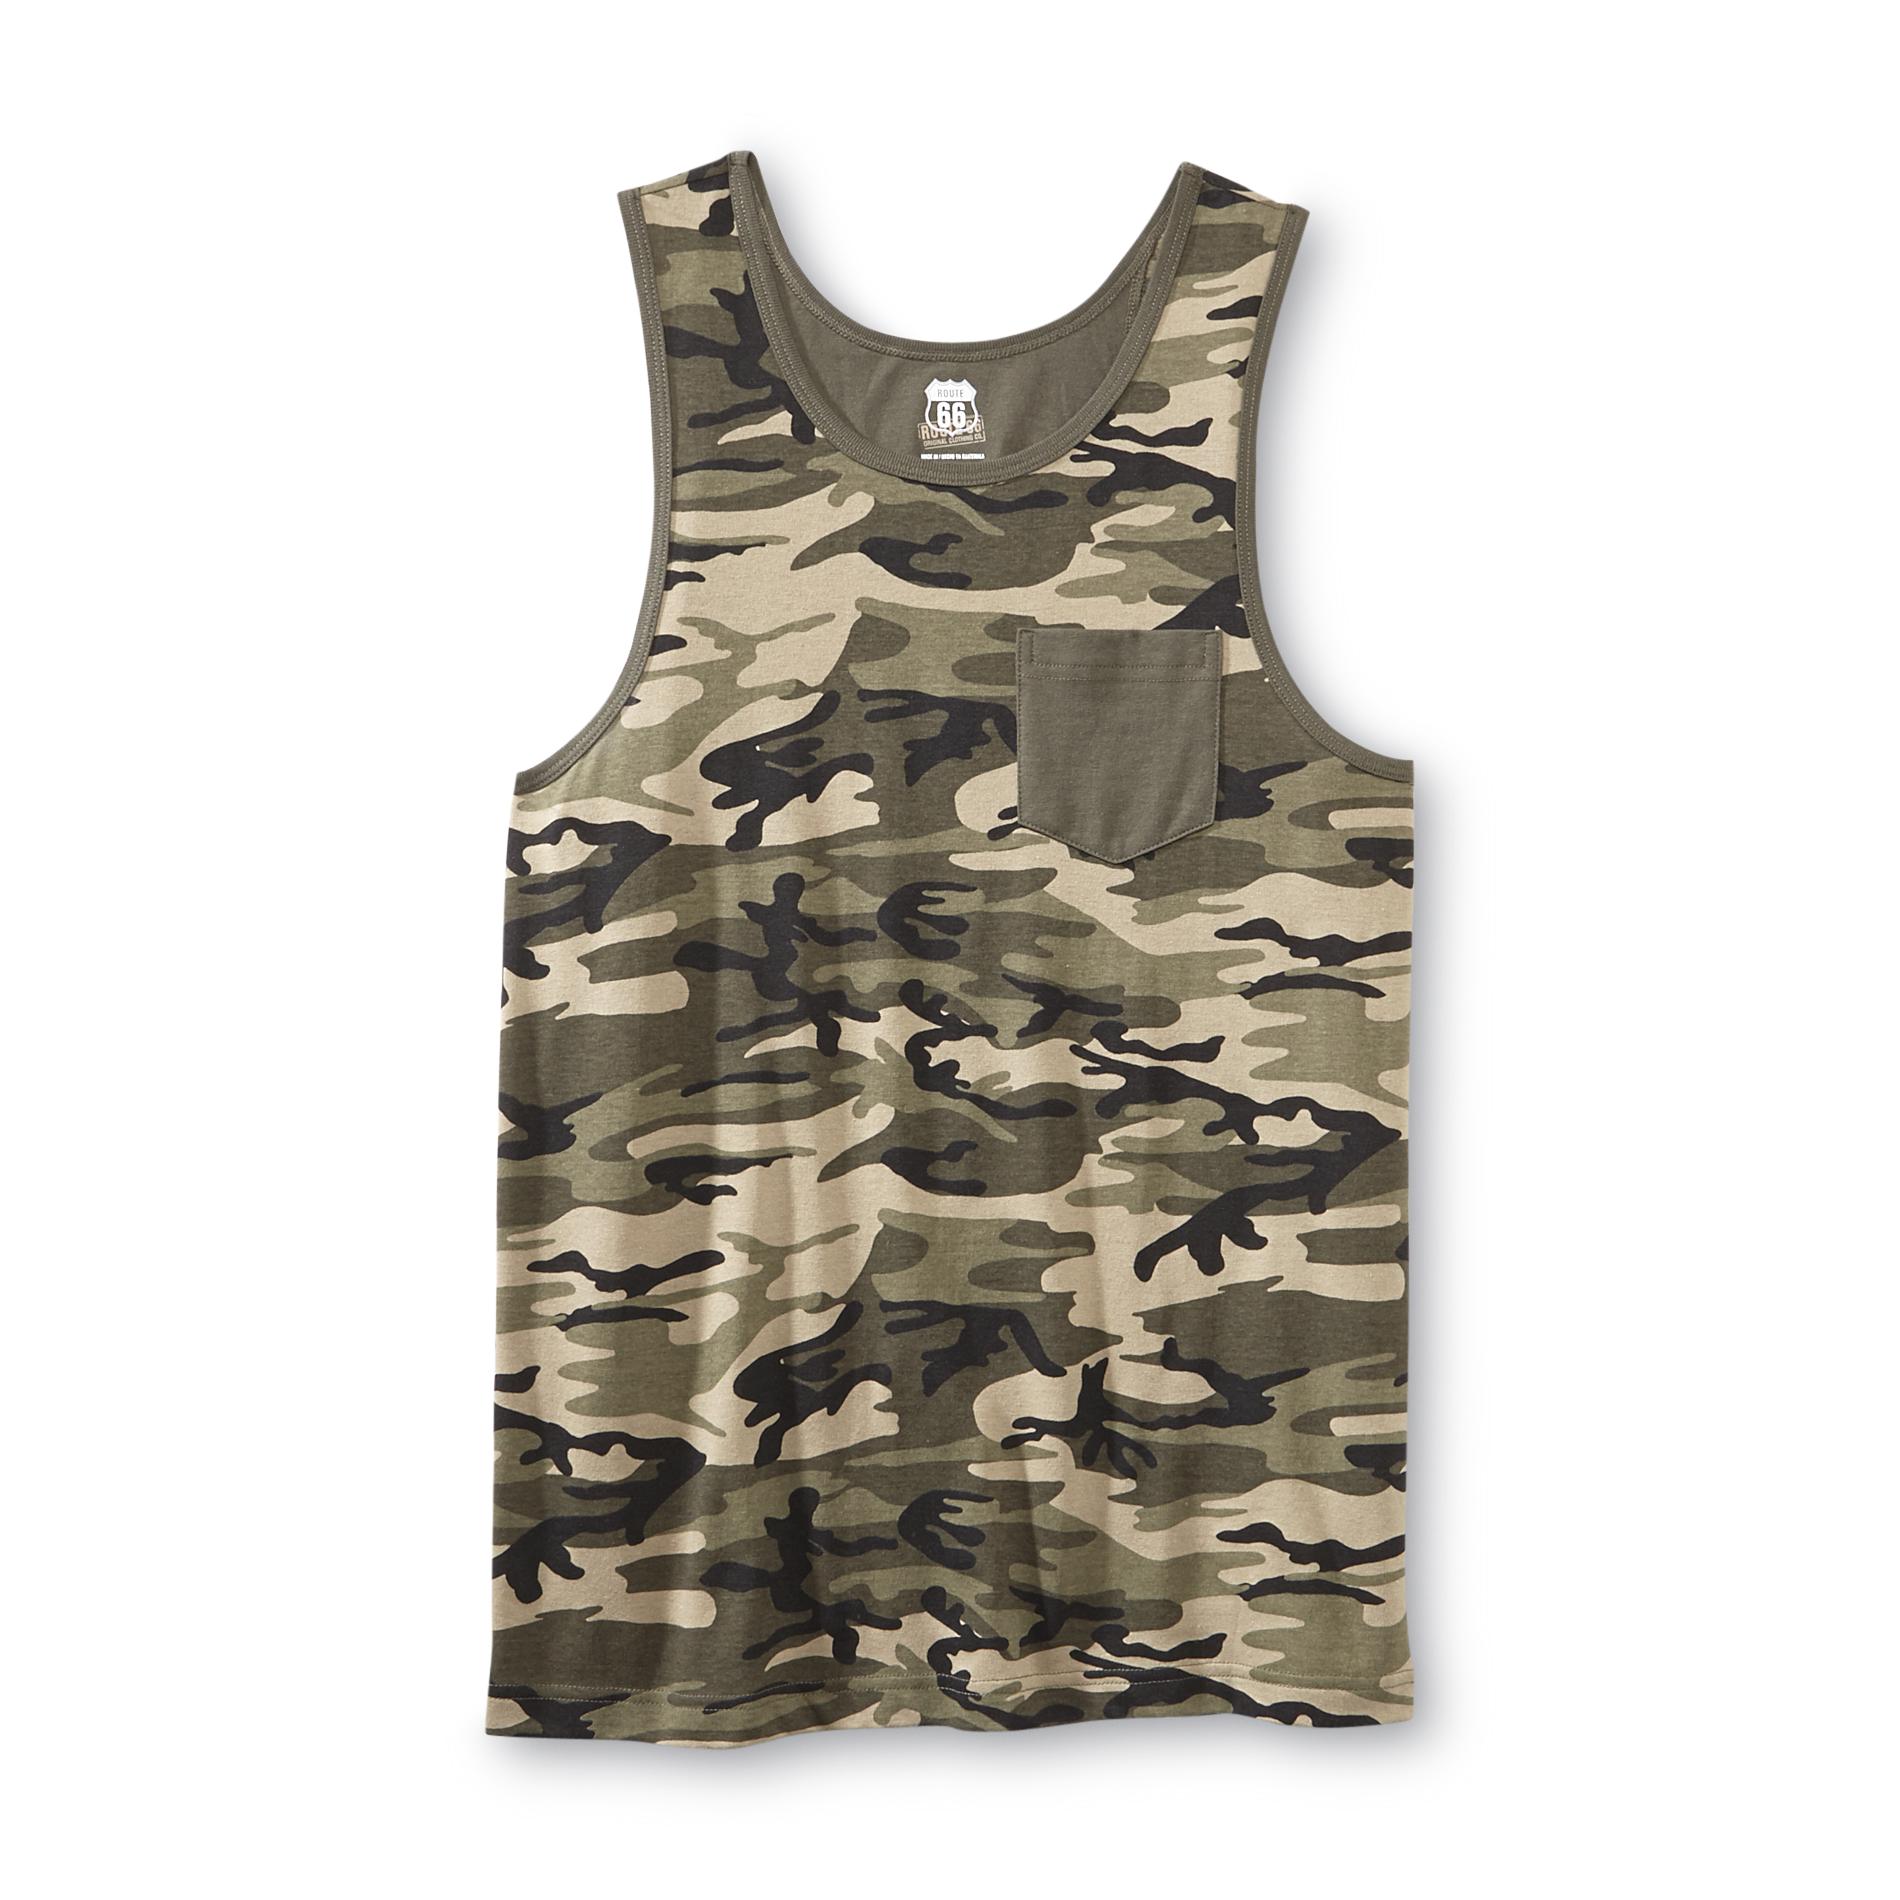 Route 66 Men's Sleeveless Shirt - Camouflage